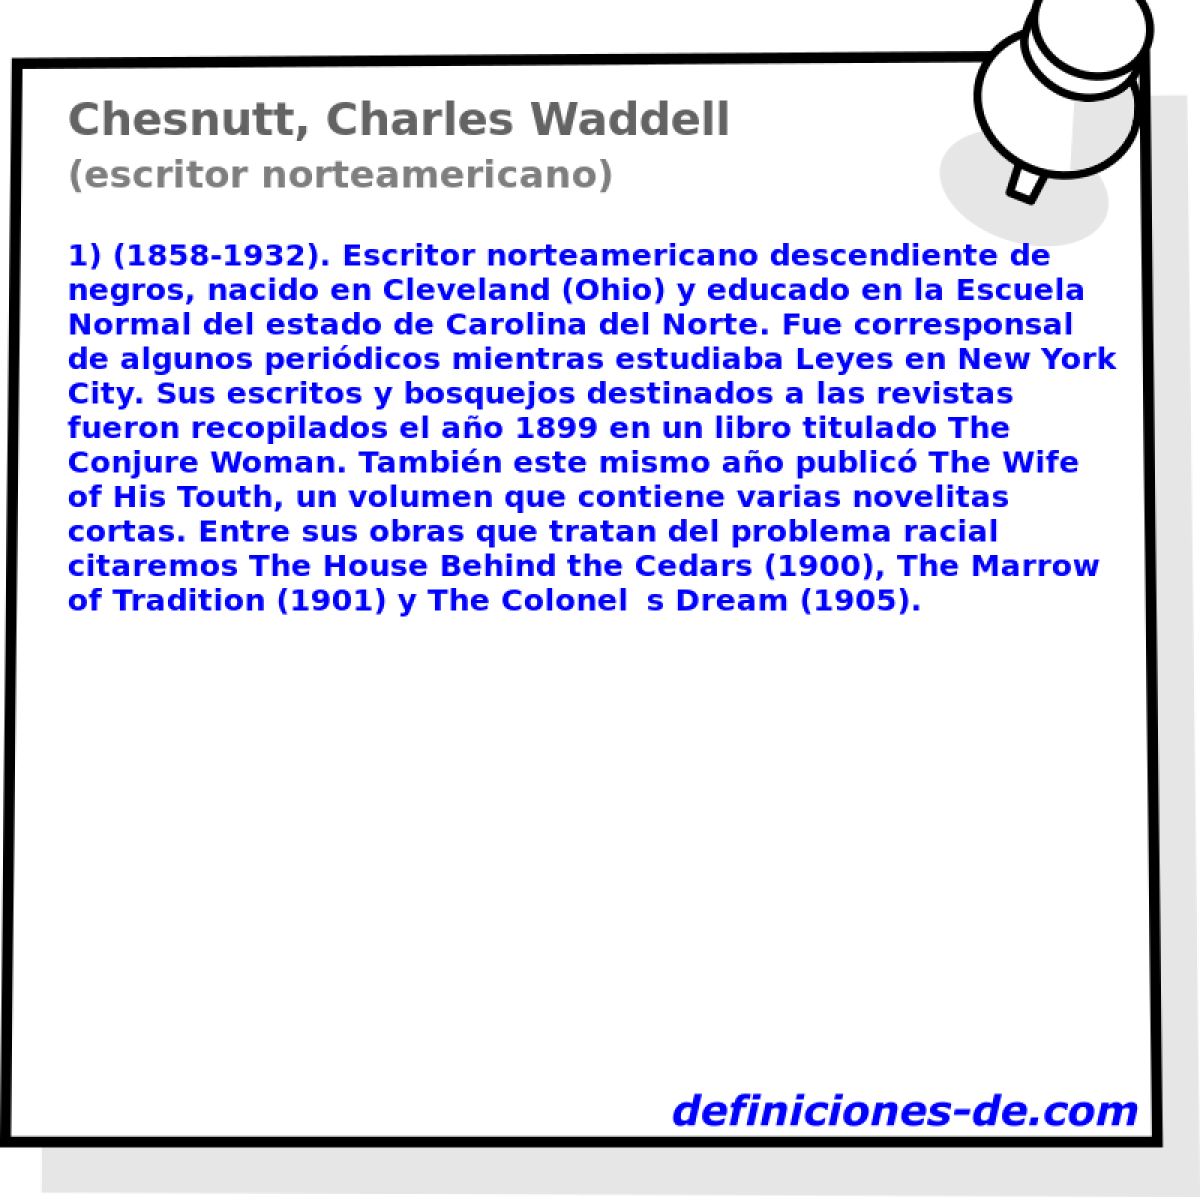 Chesnutt, Charles Waddell (escritor norteamericano)